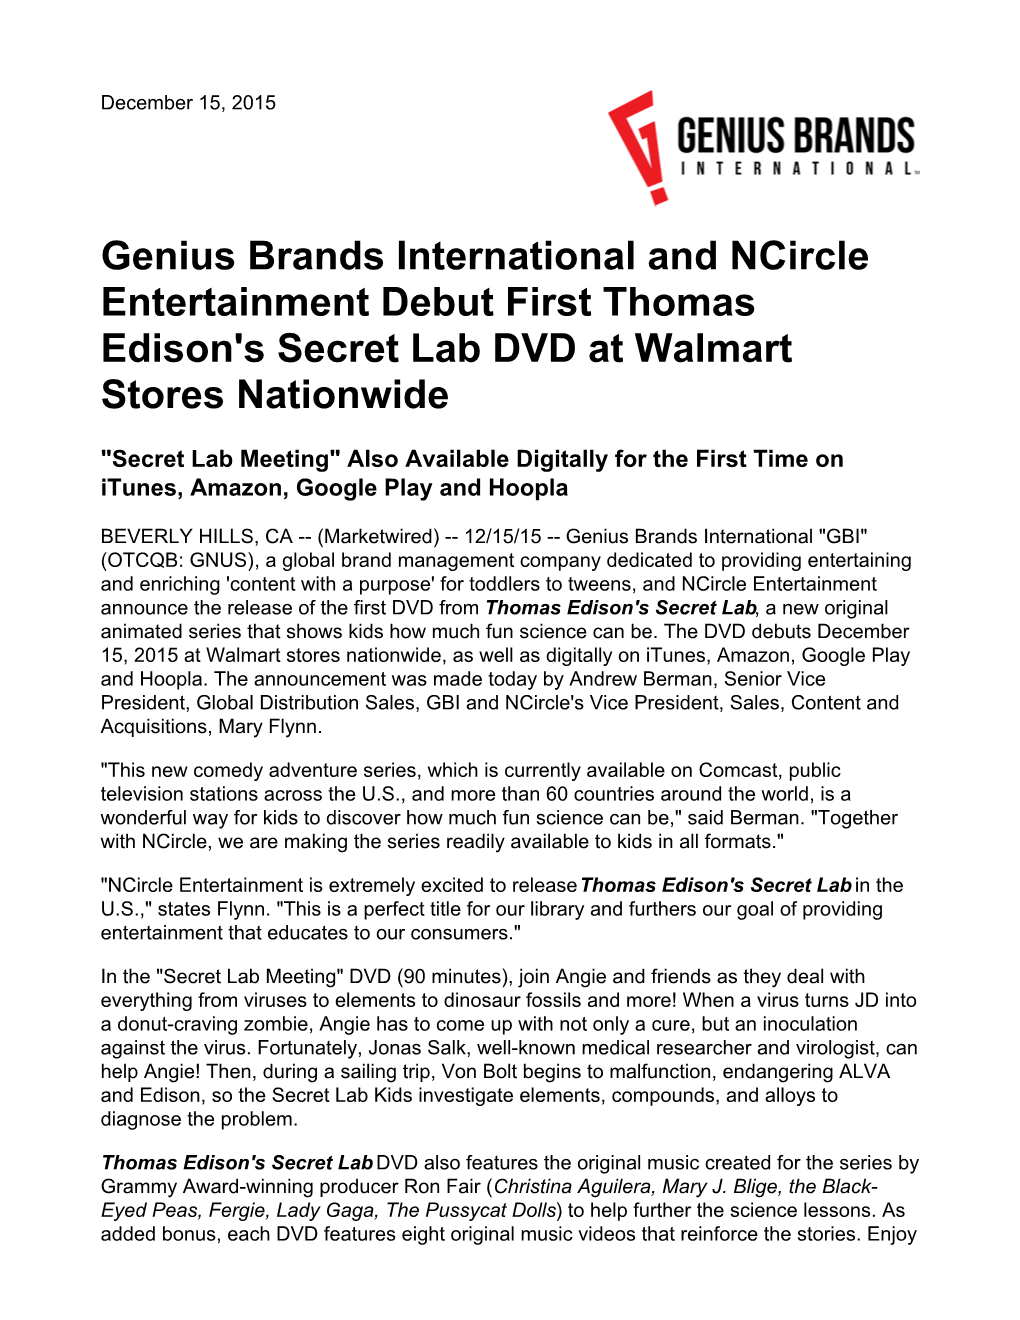 Genius Brands International and Ncircle Entertainment Debut First Thomas Edison's Secret Lab DVD at Walmart Stores Nationwide